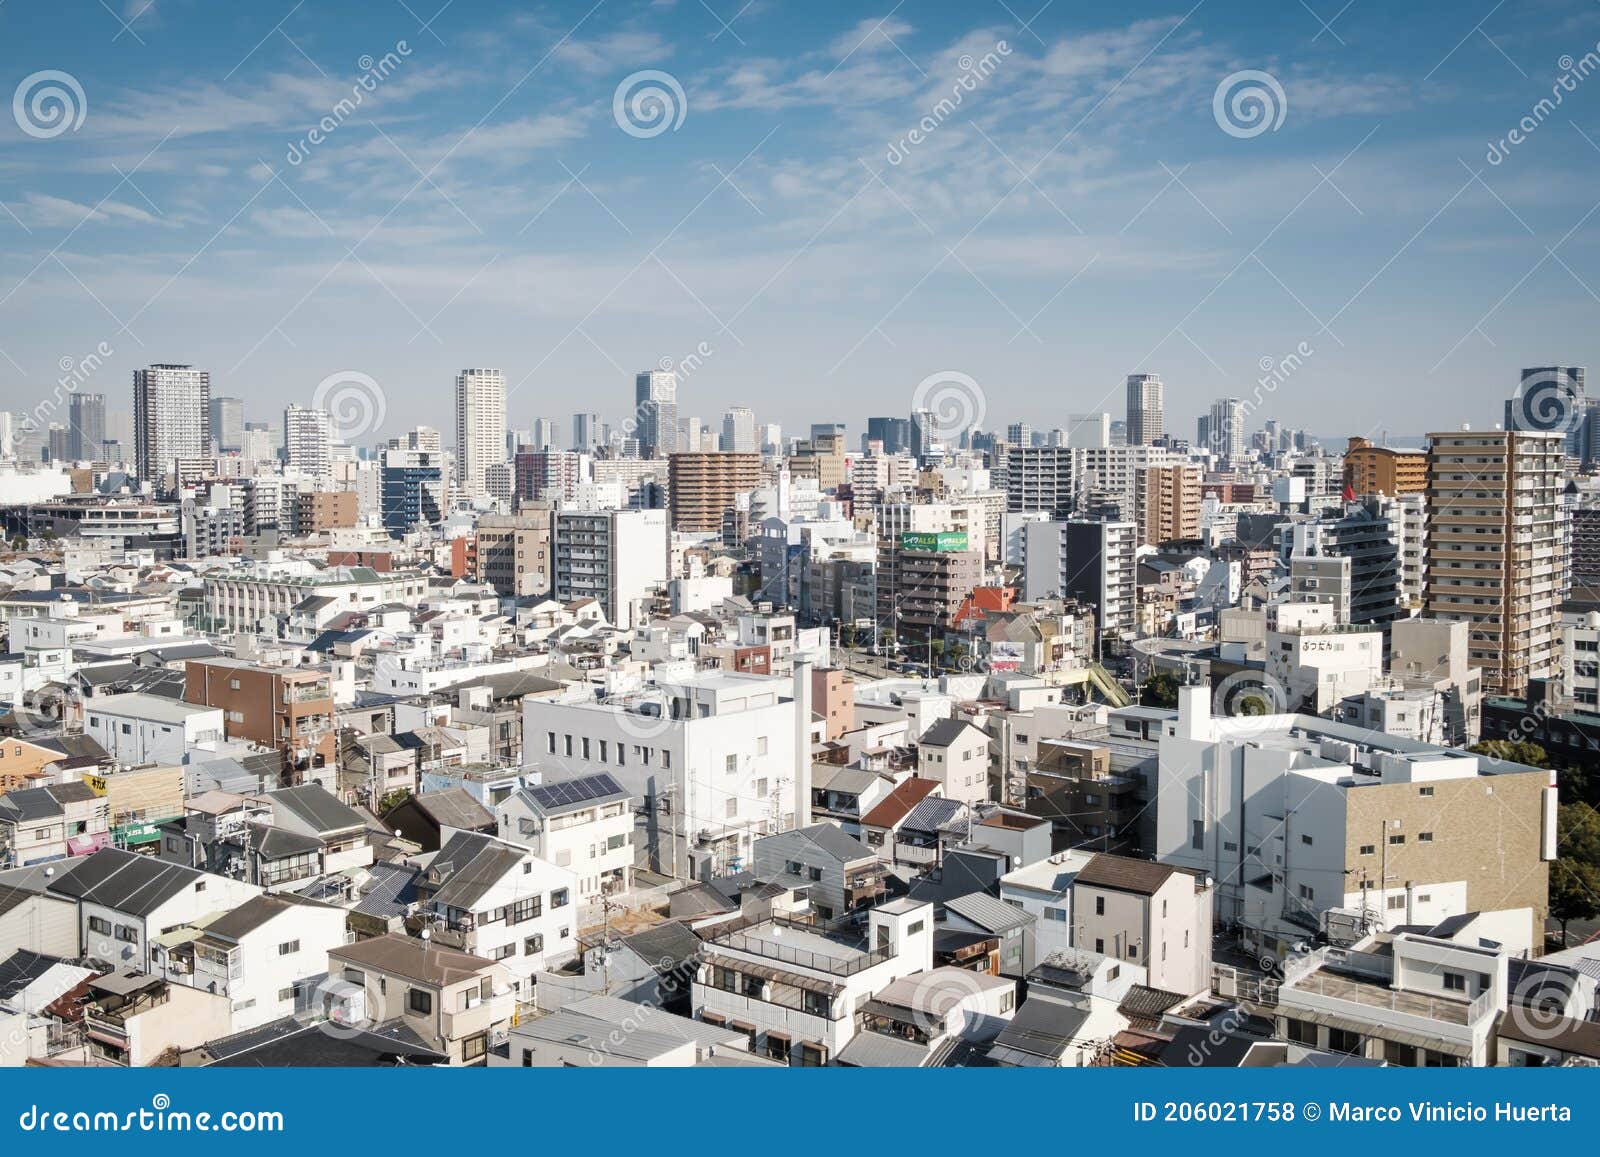 Osaka buildings population editorial stock photo. Image of japan